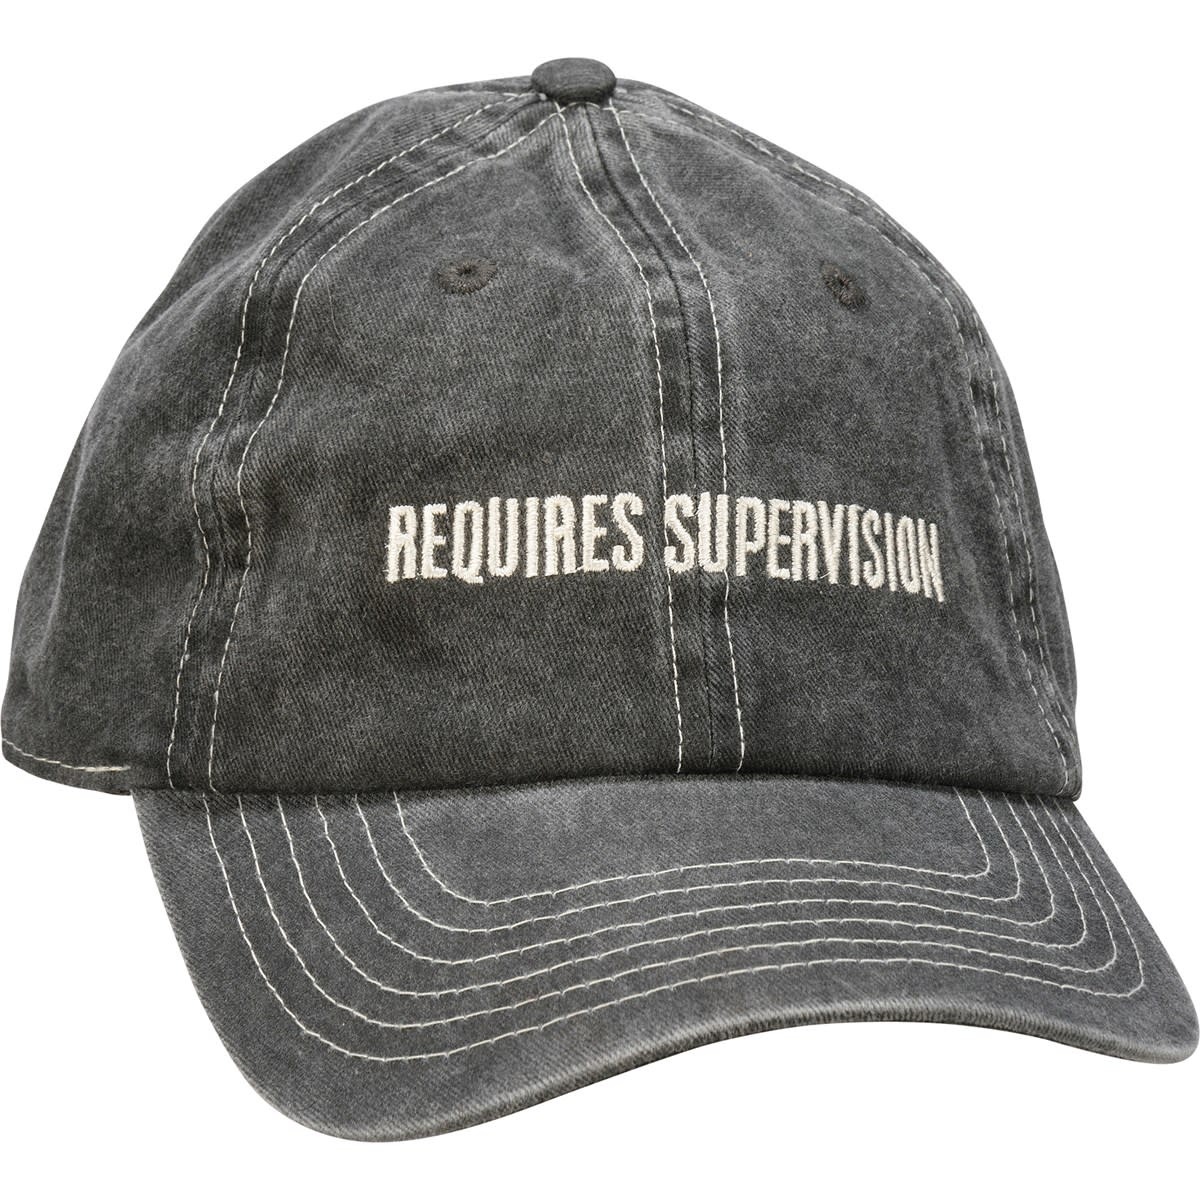 Baseball Cap - Requires Supervision